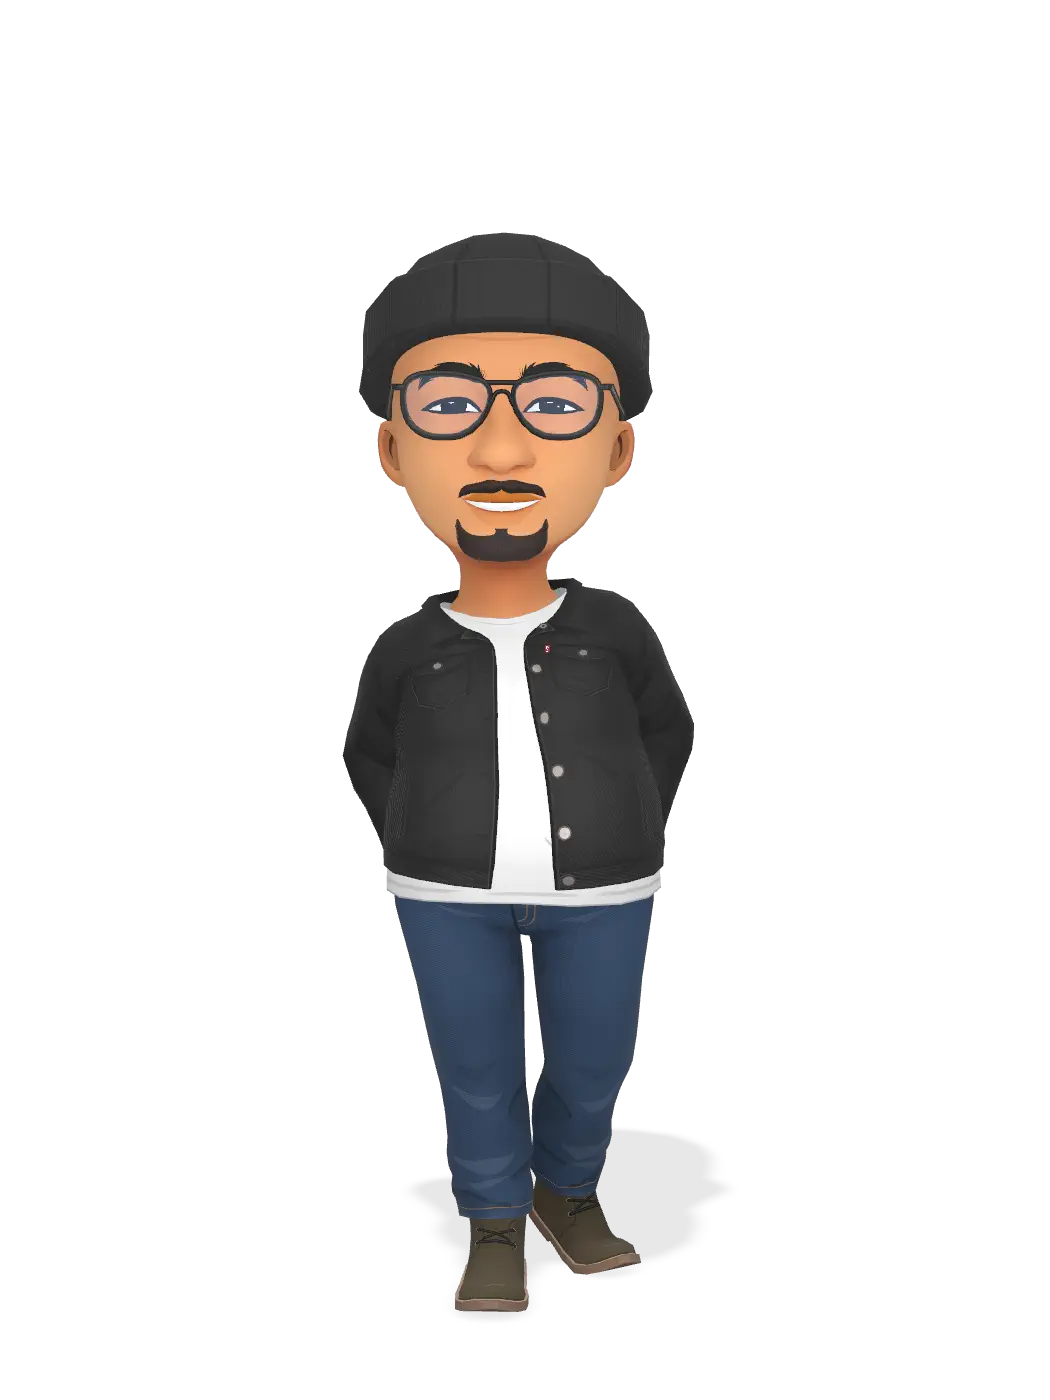 3D Bitmoji for brycebarrows avatar